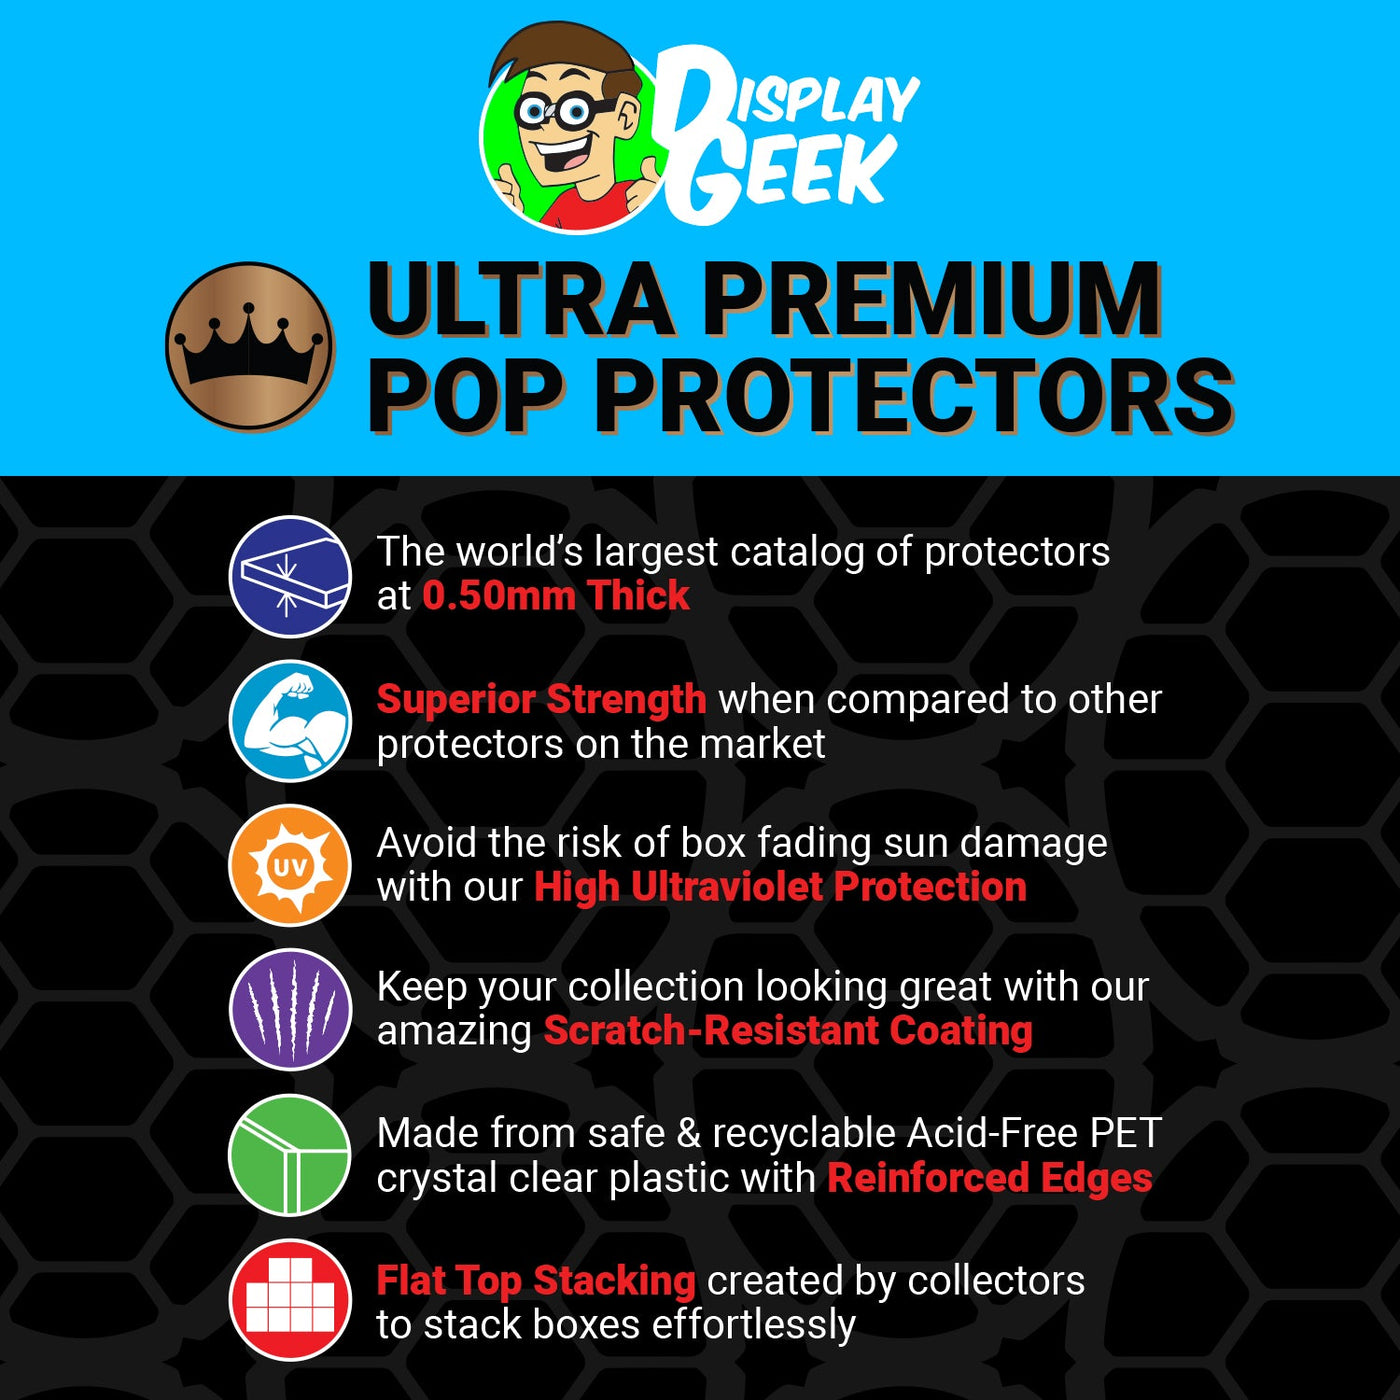 20 Pack of Funko Soda Pop Protectors 12 oz. on The Protector Guide App by Display Geek